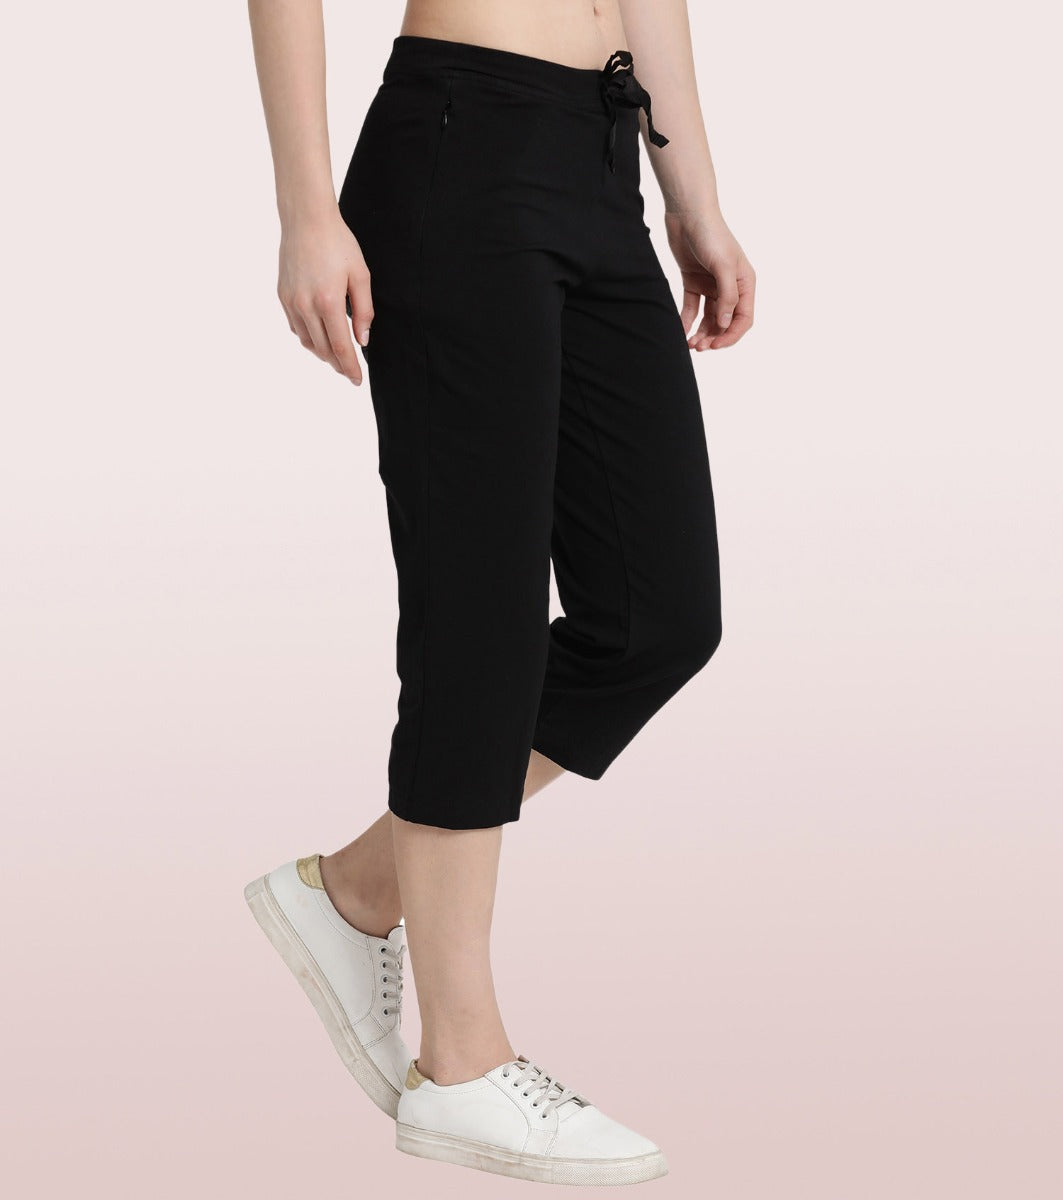 Buy the Womens Black Flat Front Drawstring Zipper Pocket Stretch Capri  Pants Size 6